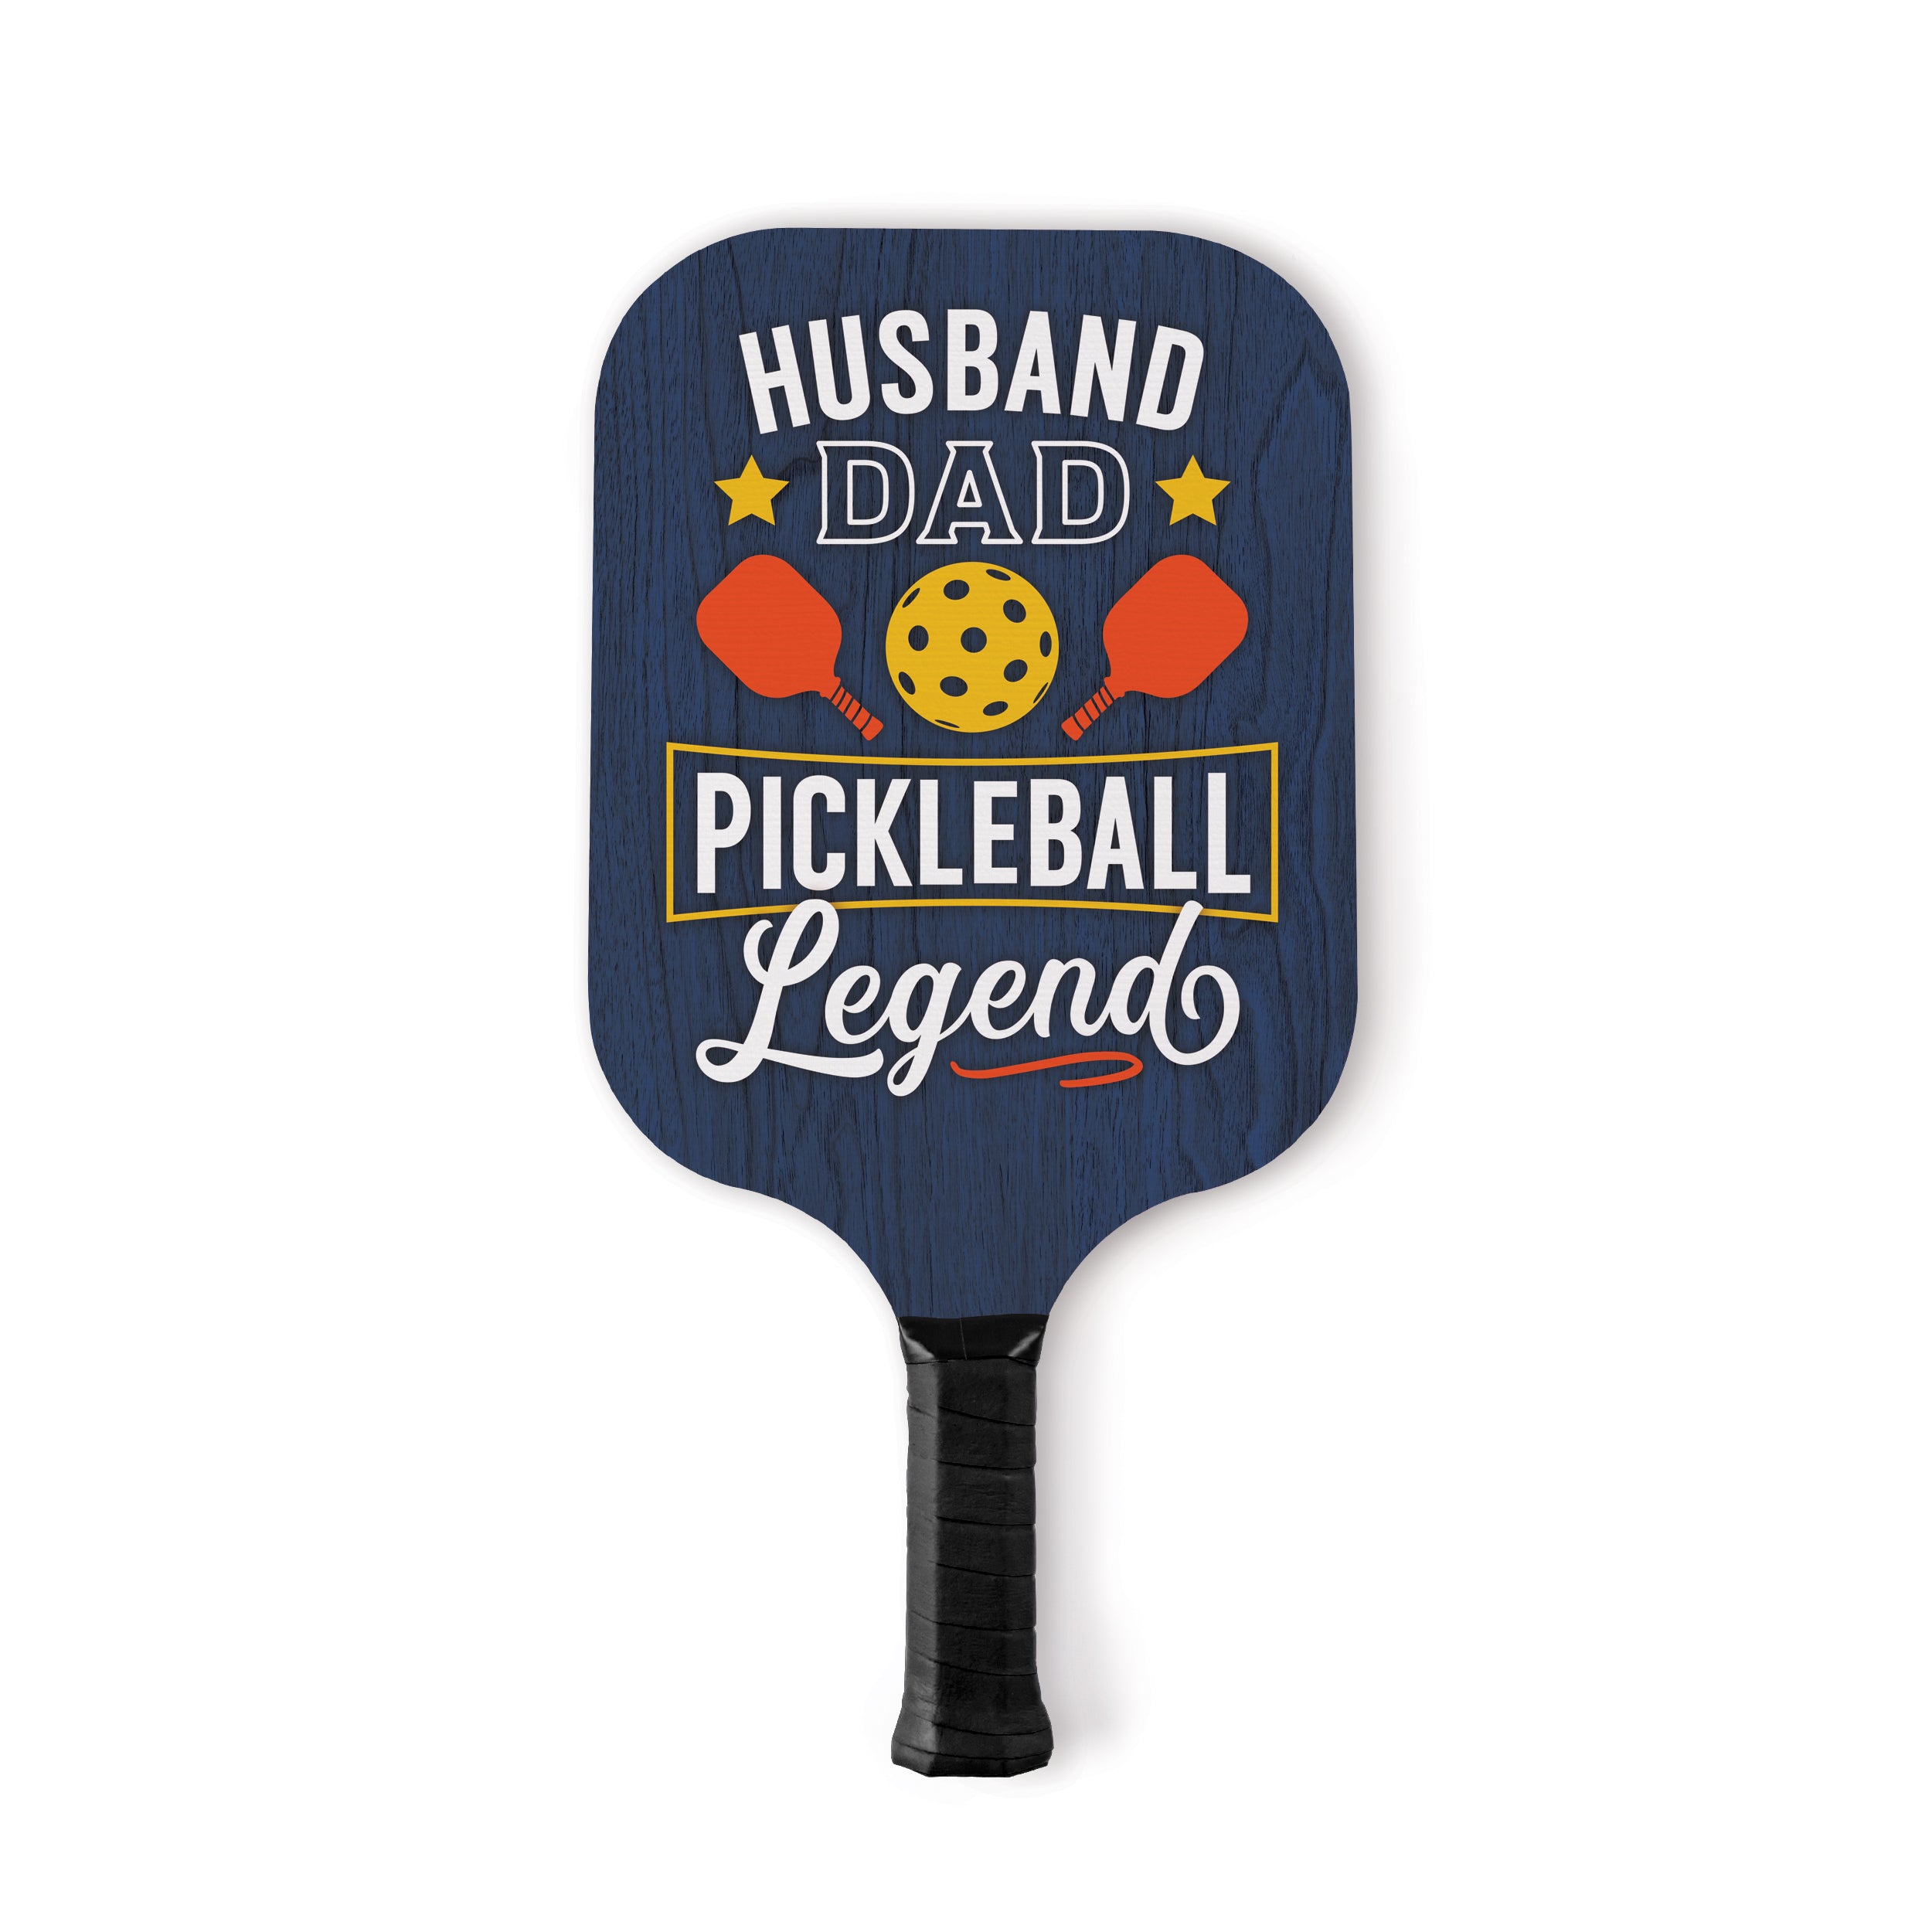 Husband Dad Pickleball Legend Pickleball Paddle